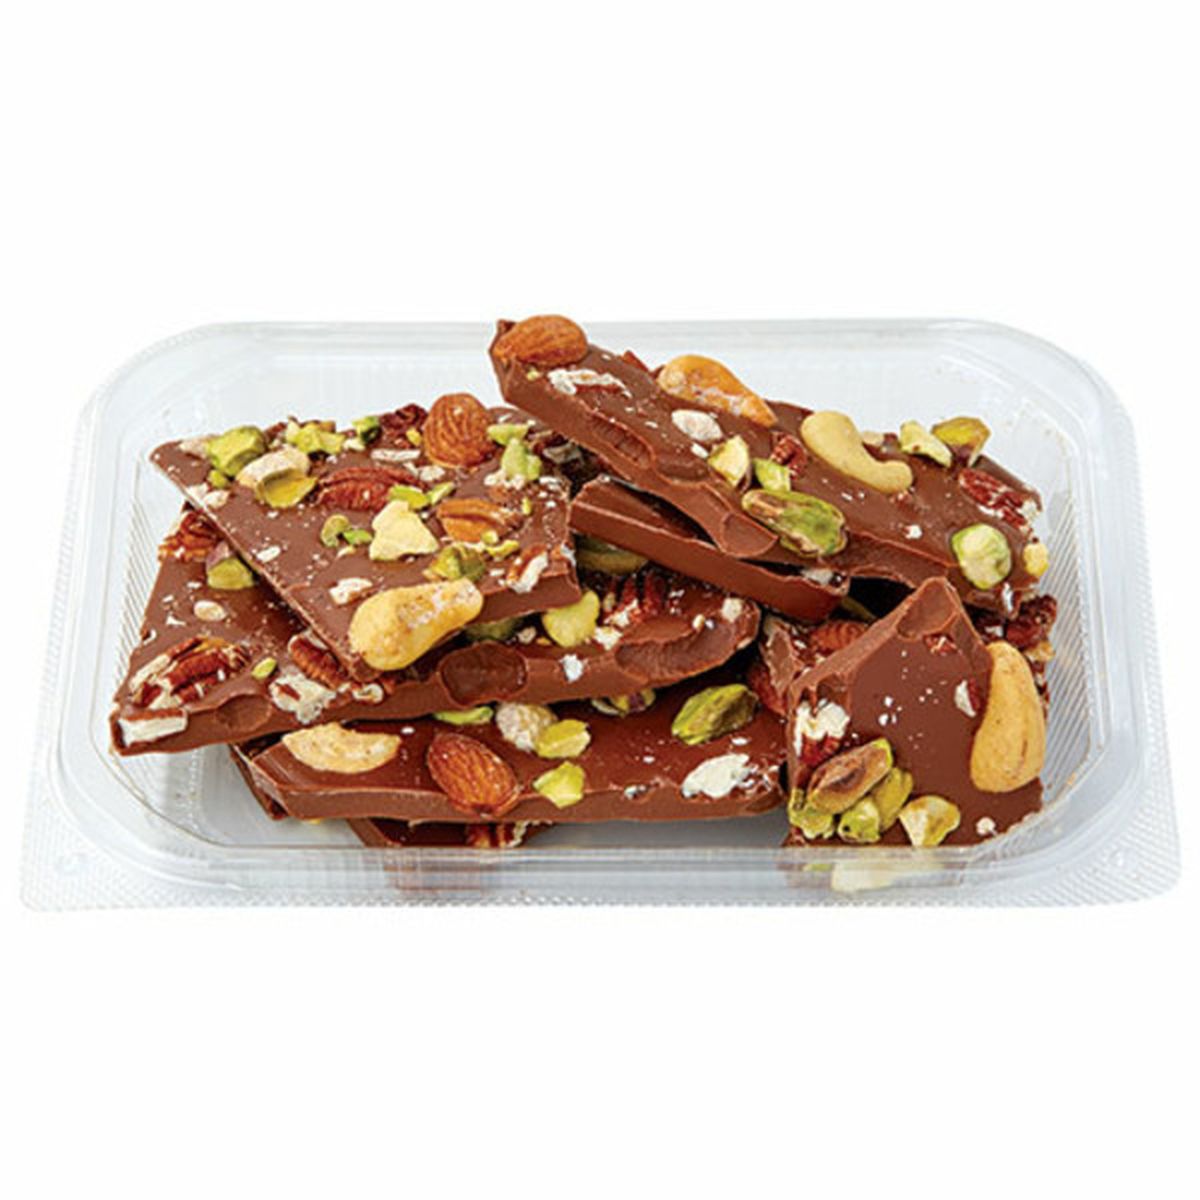 Calories in Wegmans Milk Chocolate Mixed Nut Bark